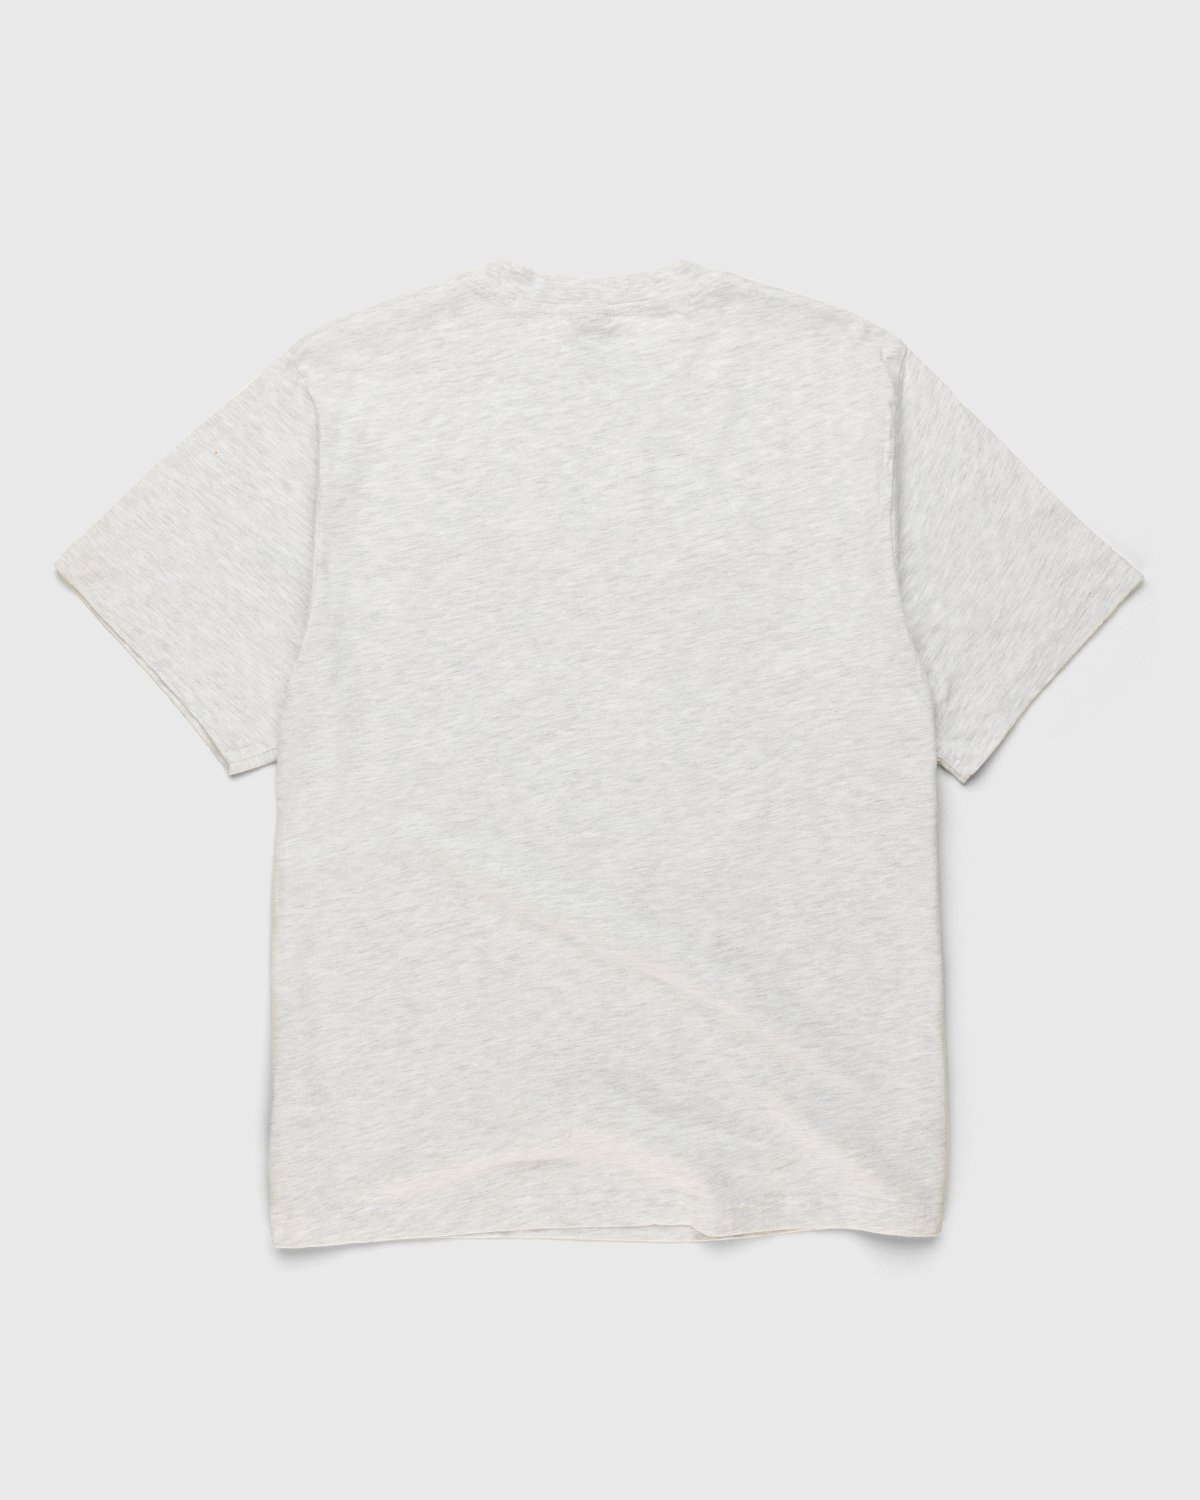 Noon Goons – Var City T-Shirt Grey - Tops - White - Image 2